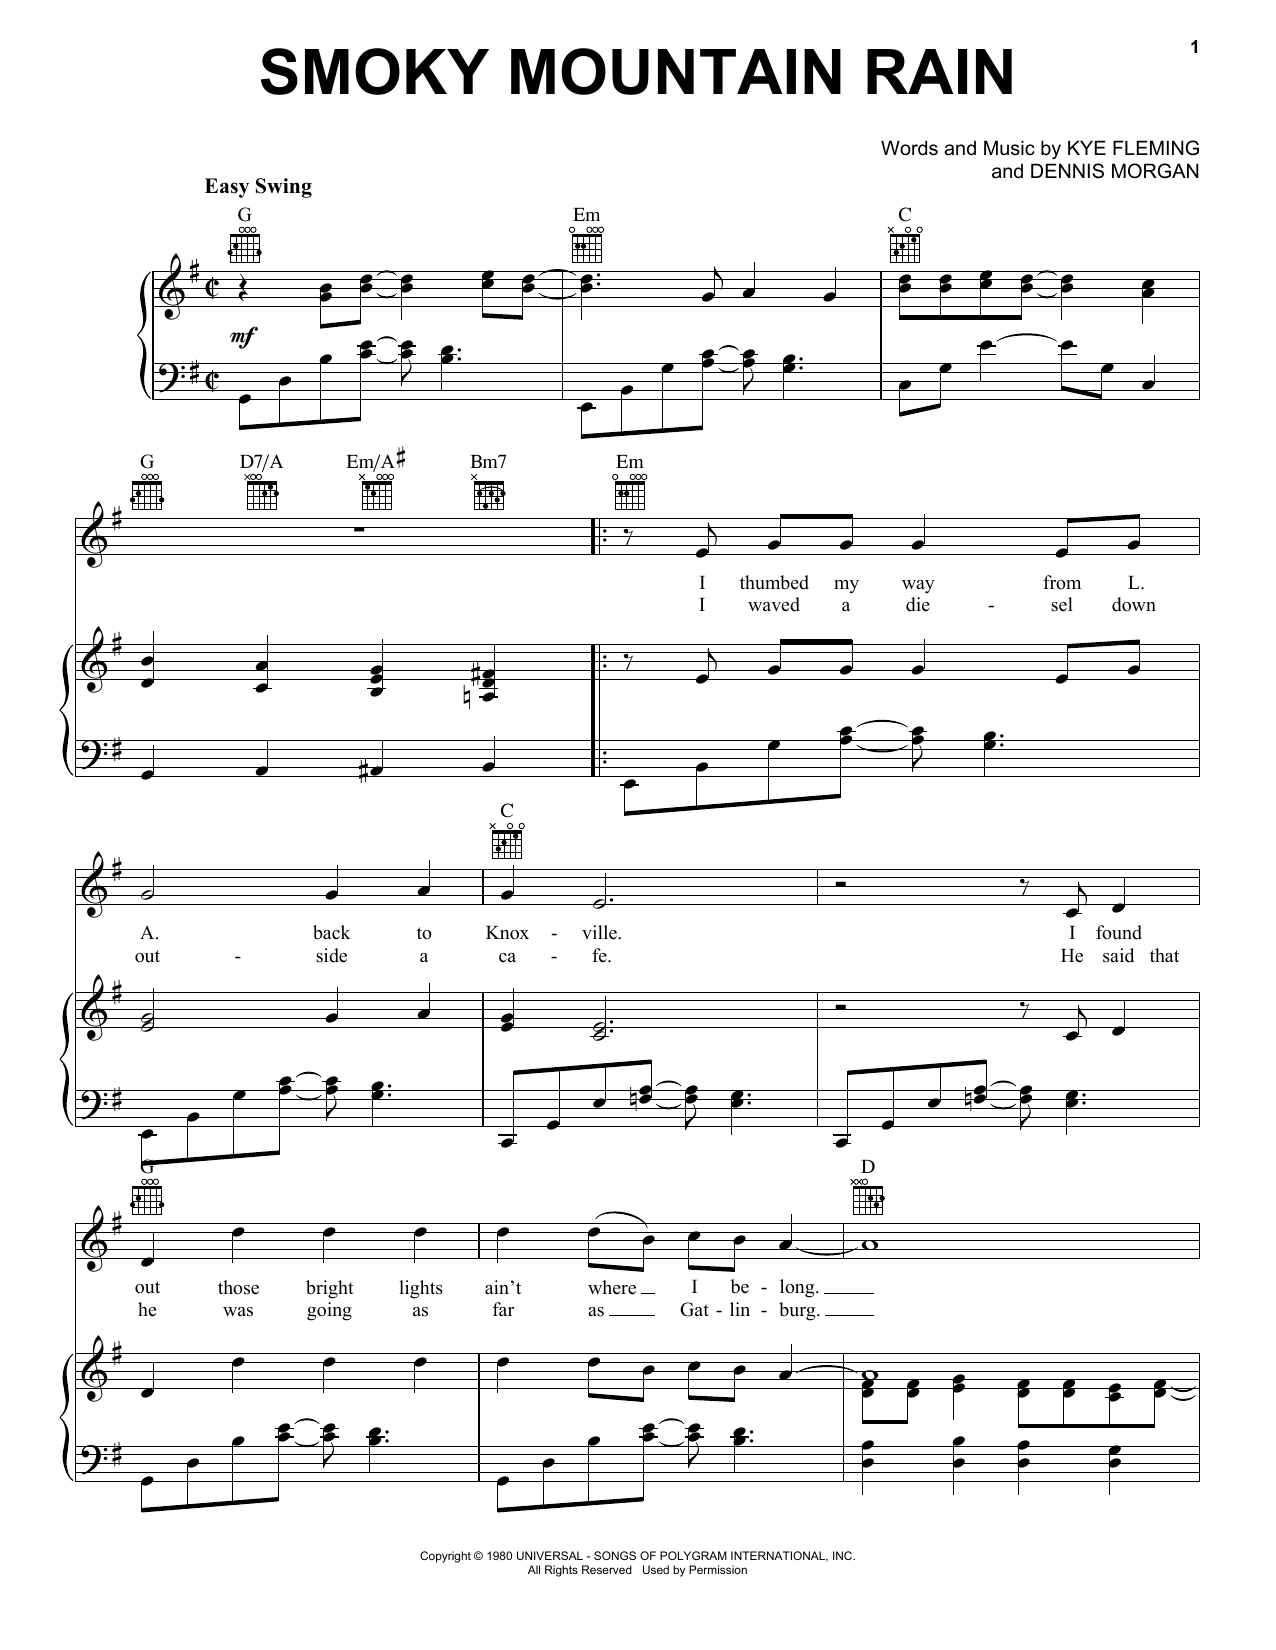 Ronnie Milsap Smoky Mountain Rain Sheet Music Notes & Chords for Lyrics & Chords - Download or Print PDF